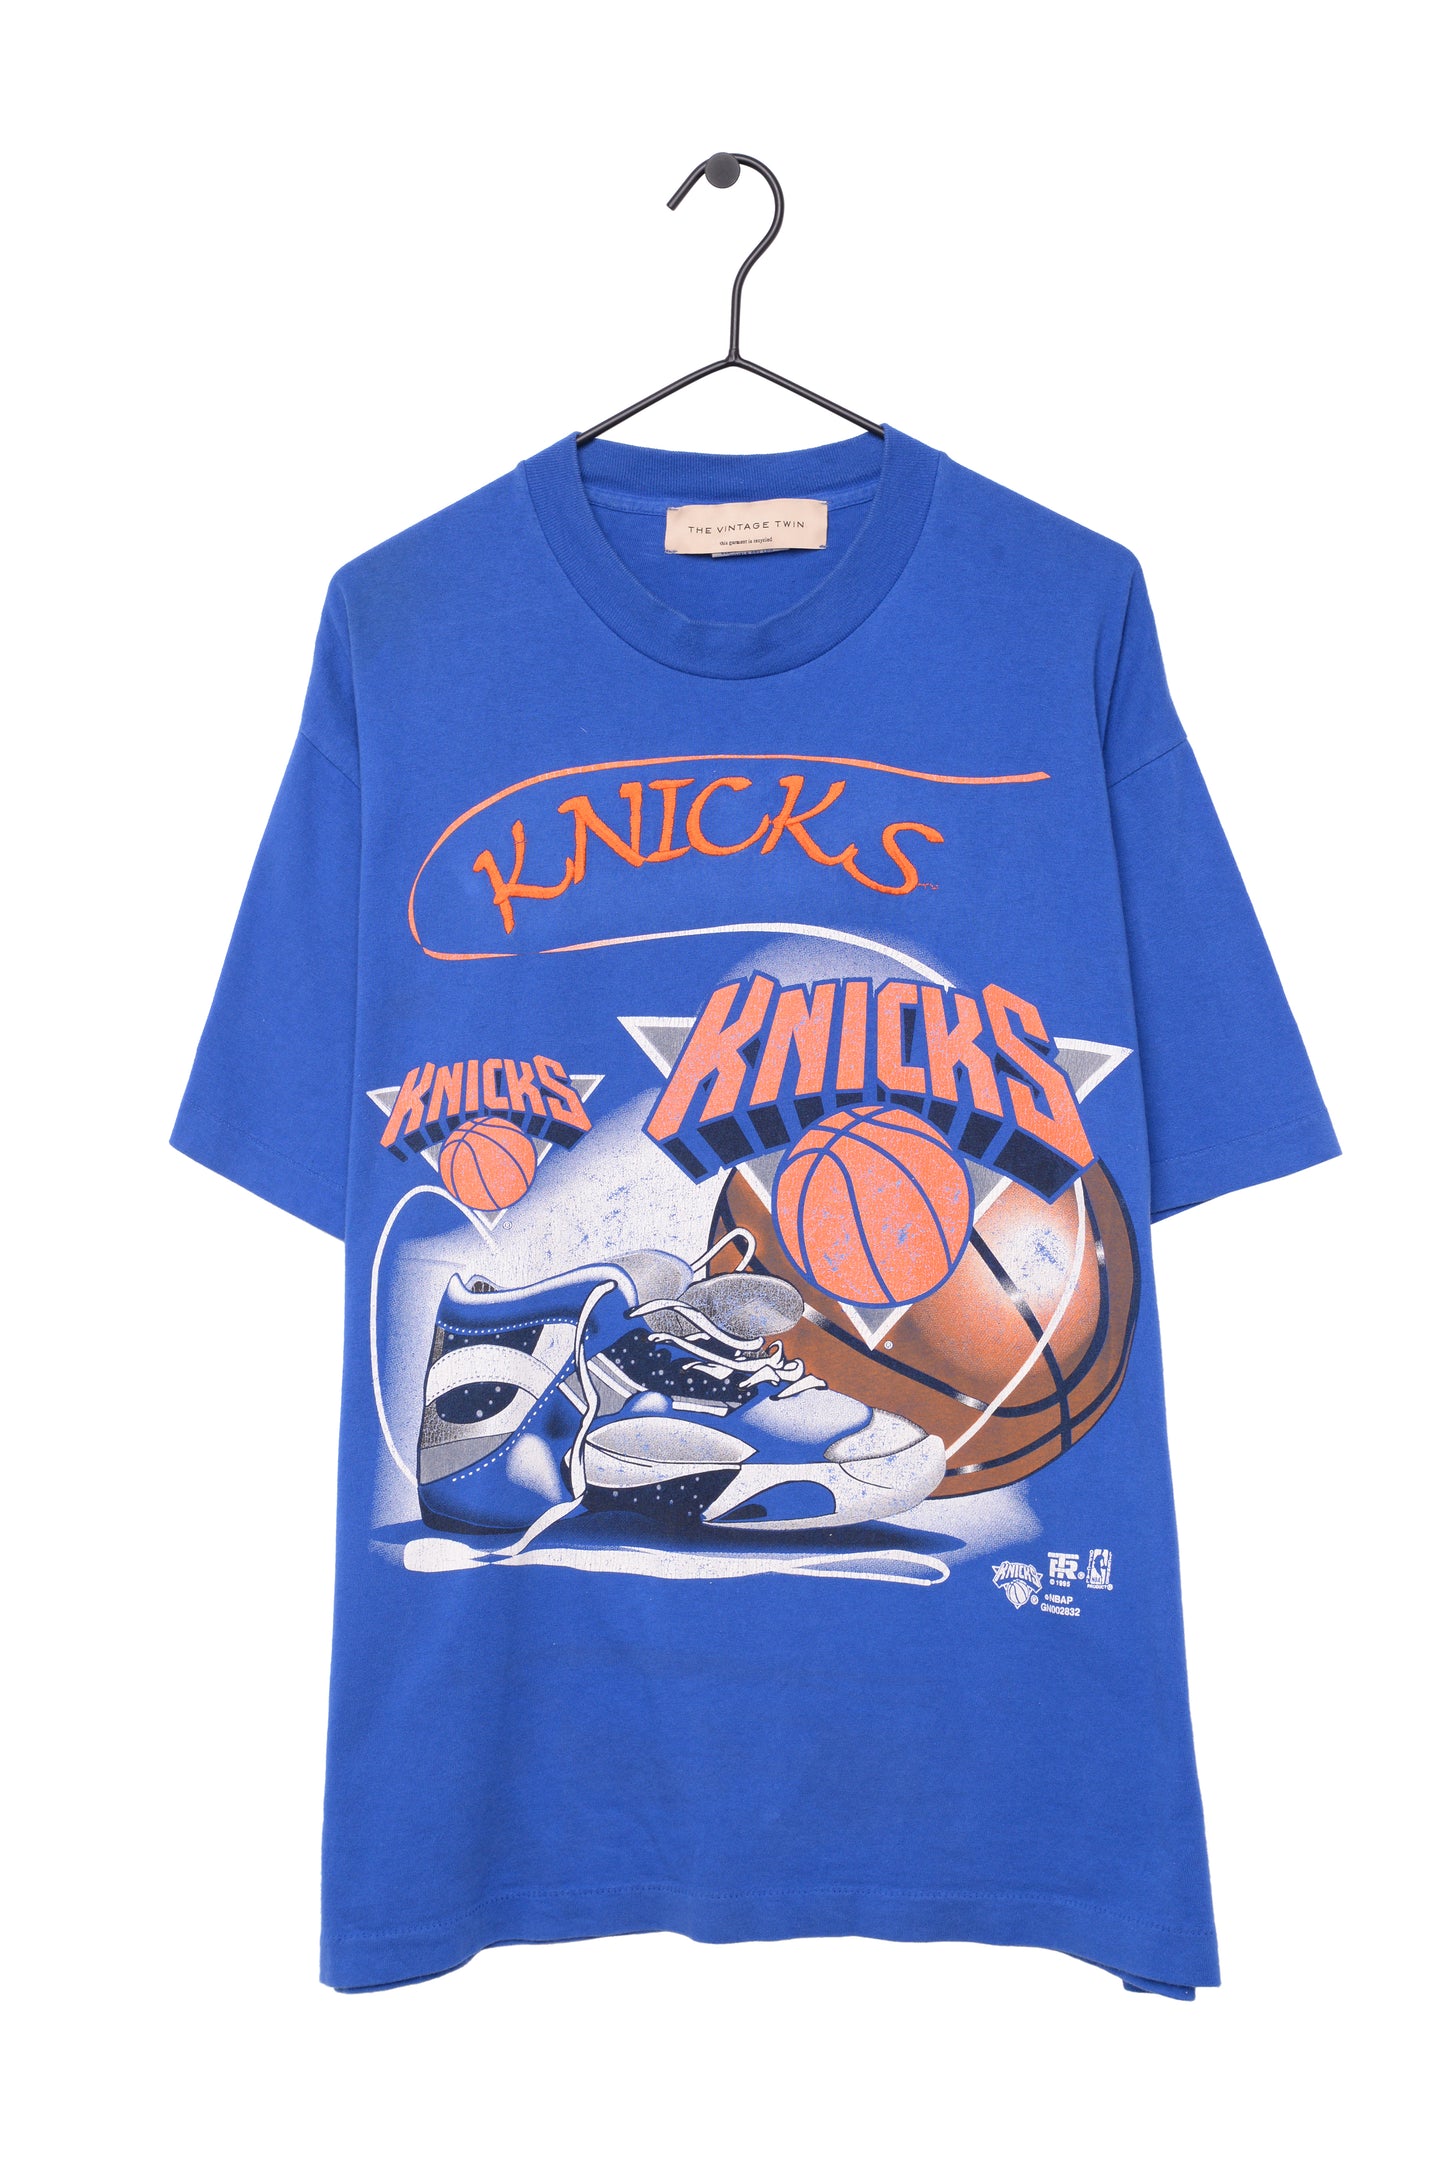 1995 New York Knicks Tee USA